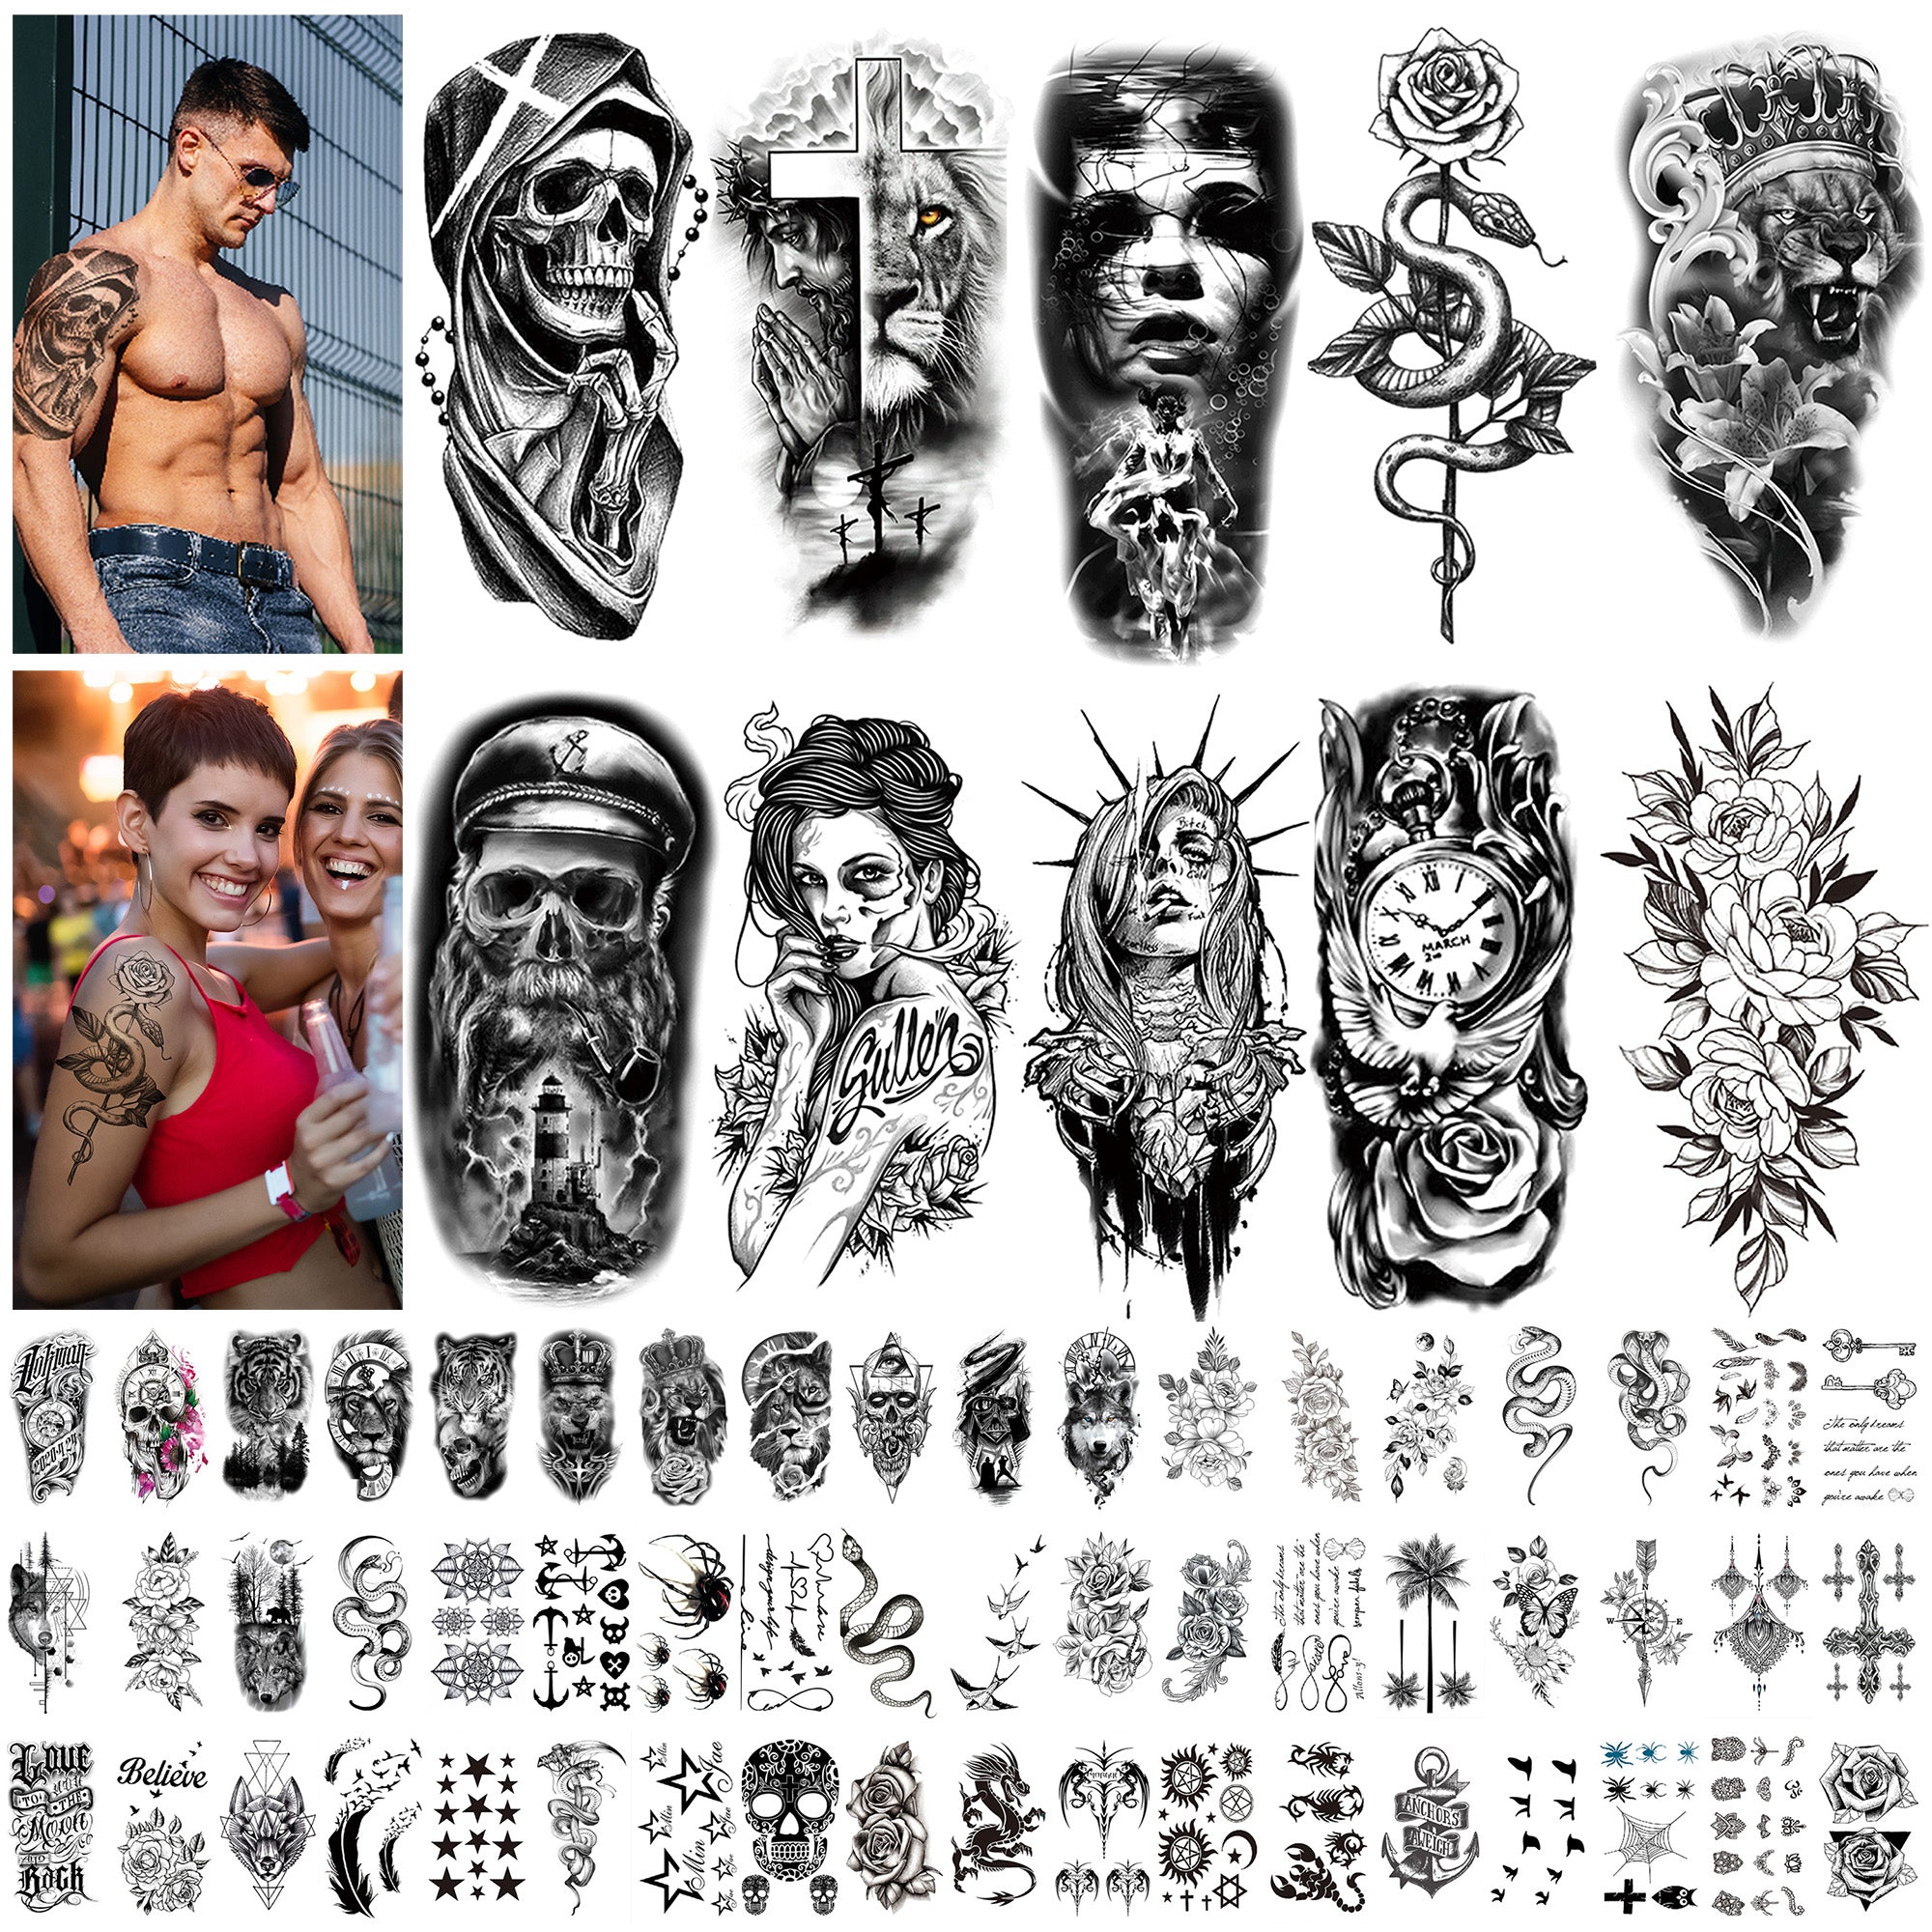 New Design || A❤ Letter Tattoo || Beautiful Tattoo Designs - YouTube